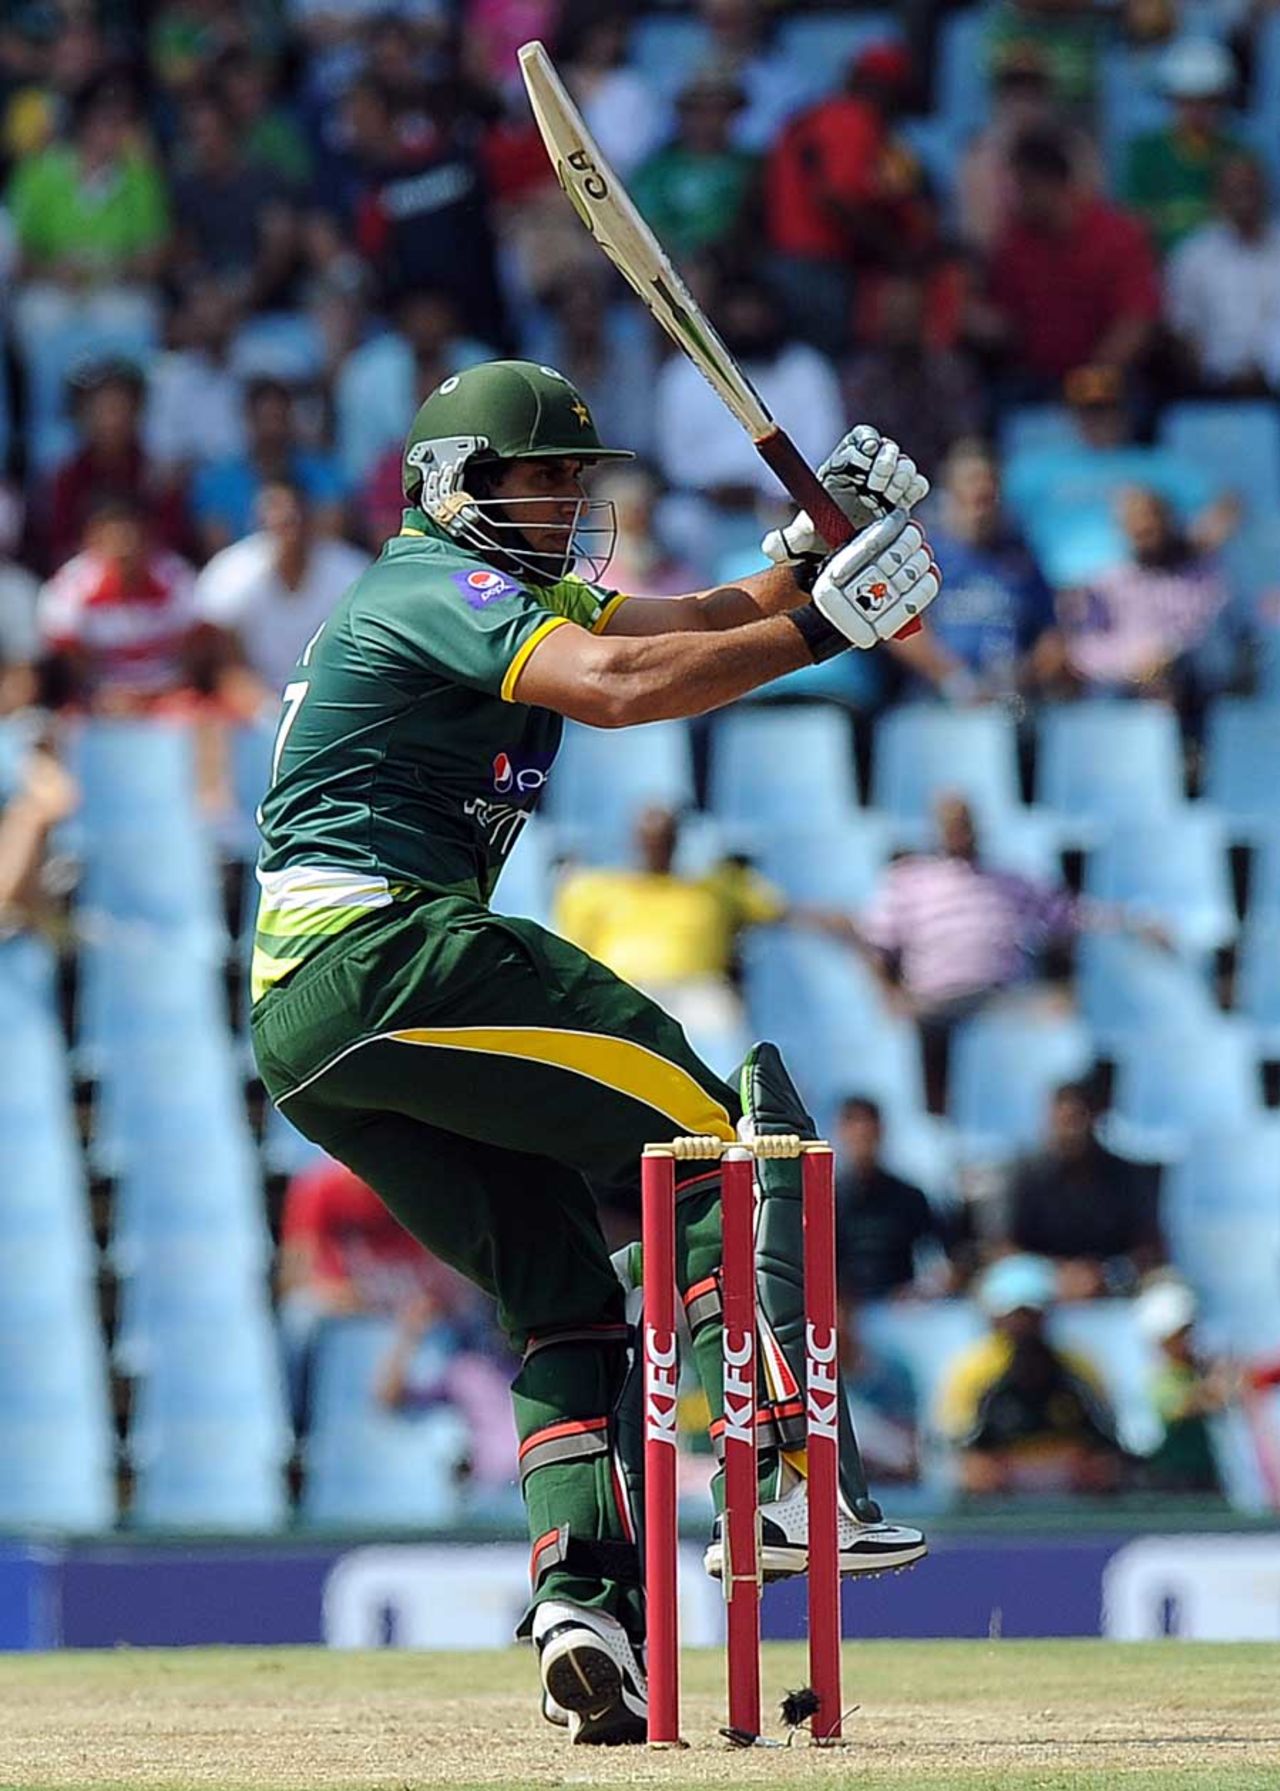 Nasir Jamshed whips one square, South Africa v Pakistan, 2nd T20I, Centurion, March 3, 2013